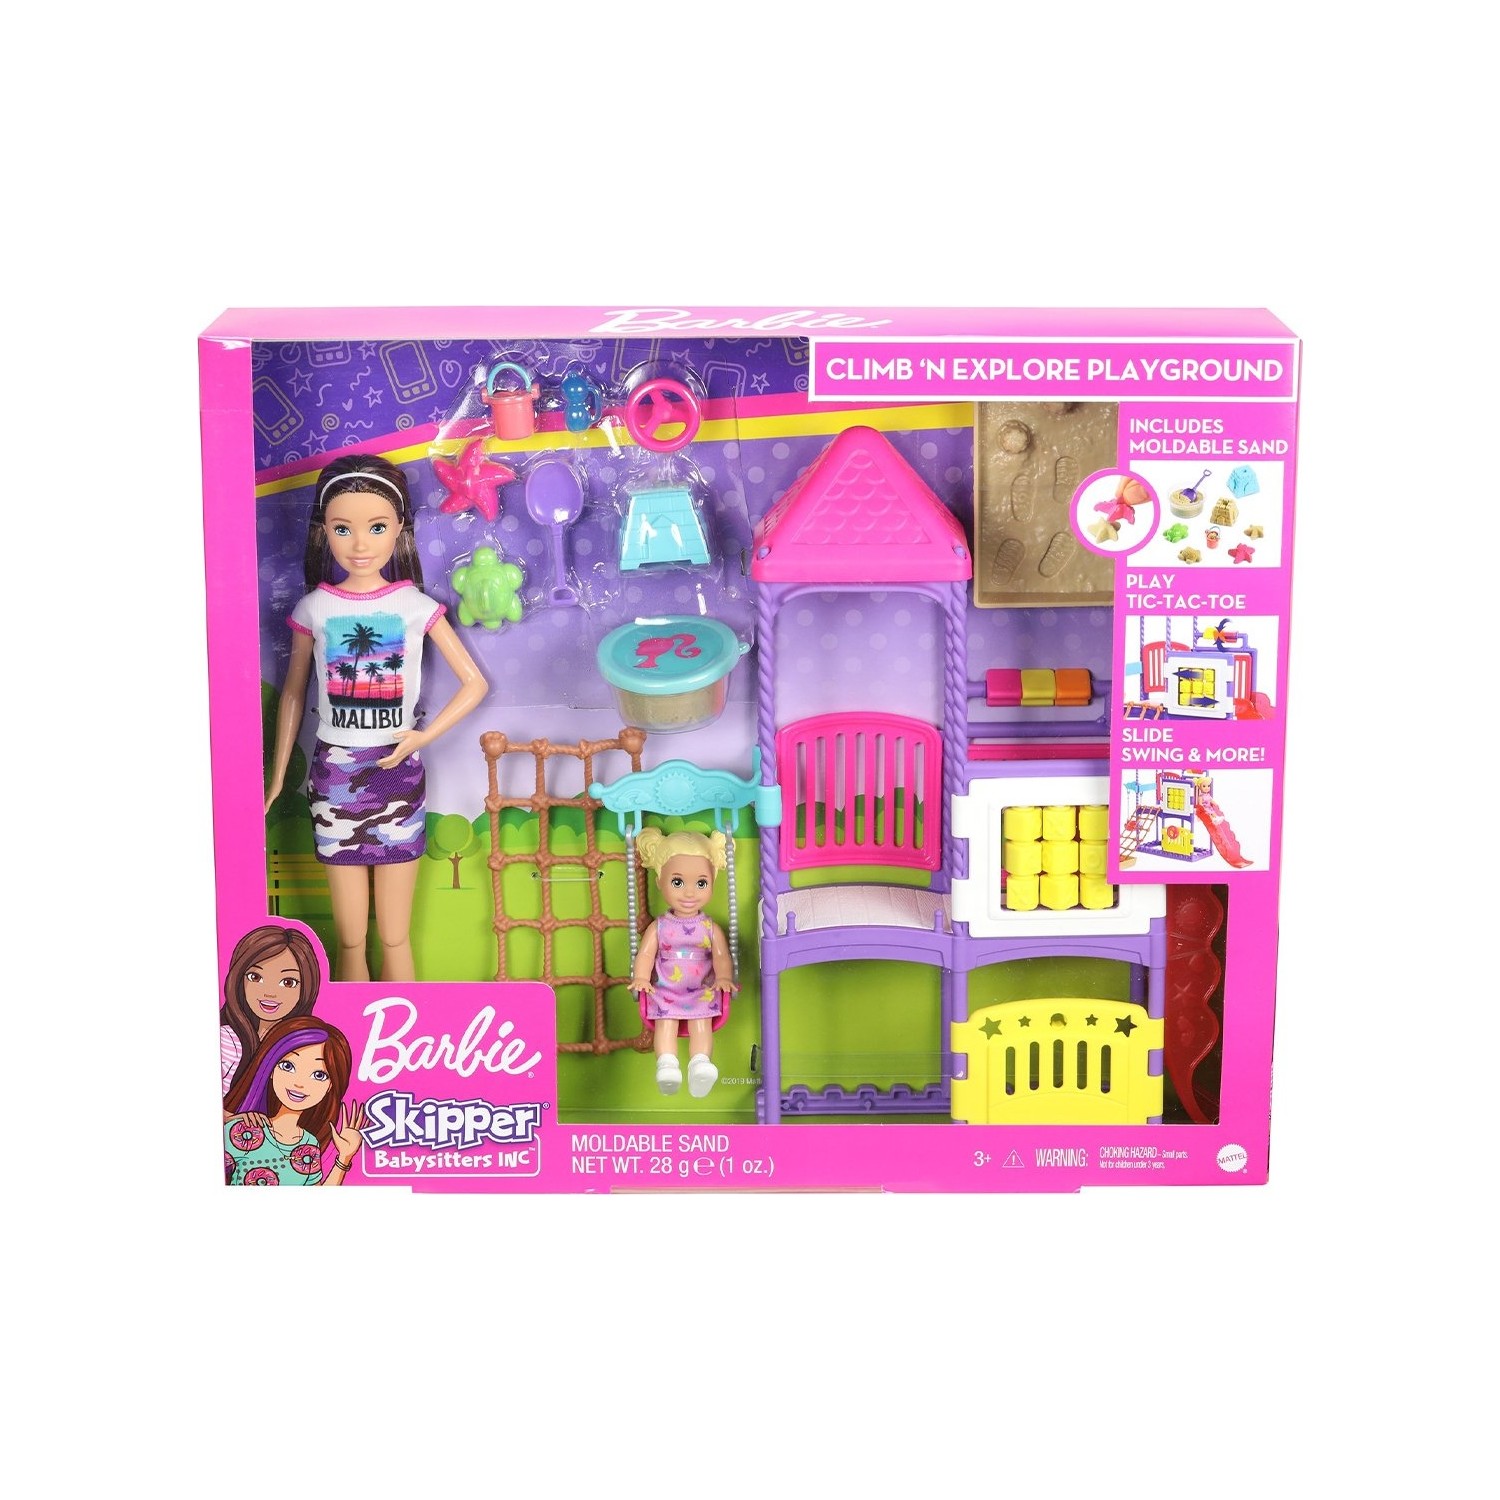 Игровой набор Barbie Skipper Babysitters набор игровой barbie pets s2 dreamhouse